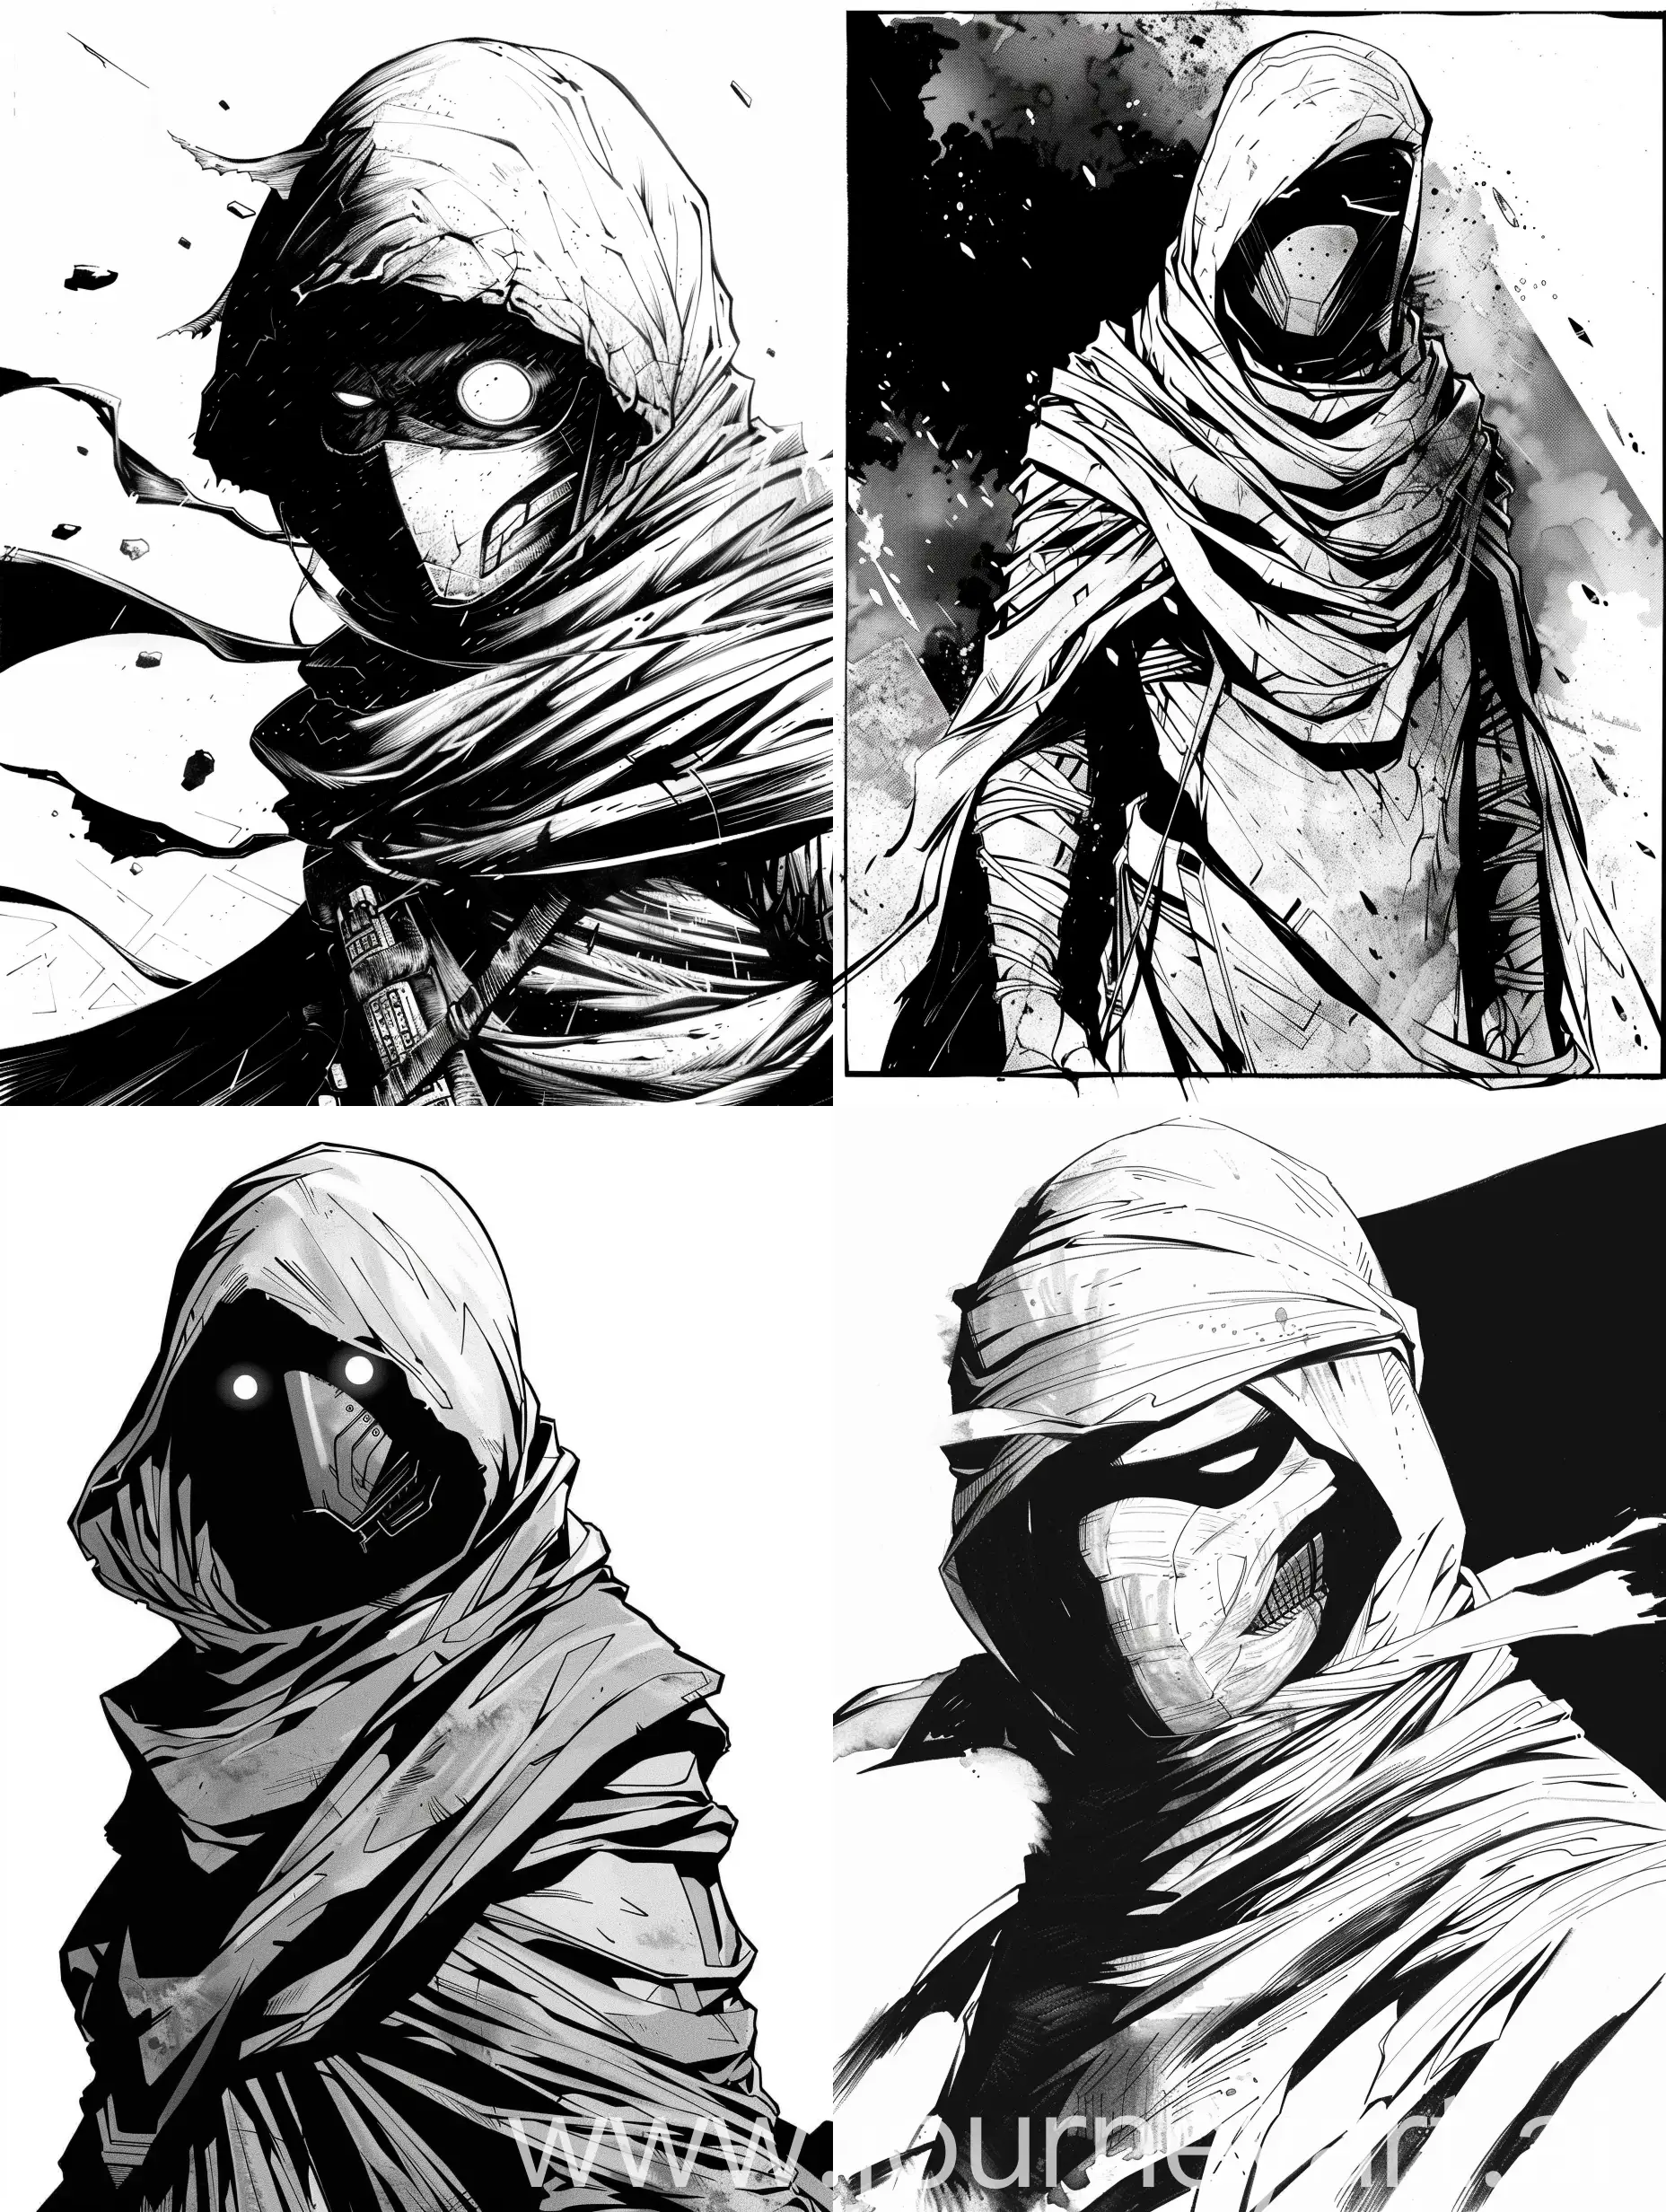 manga art, dark lord, ranger in wraps and hood, sci fi eyesless mask, manga style, comics page, black and white 